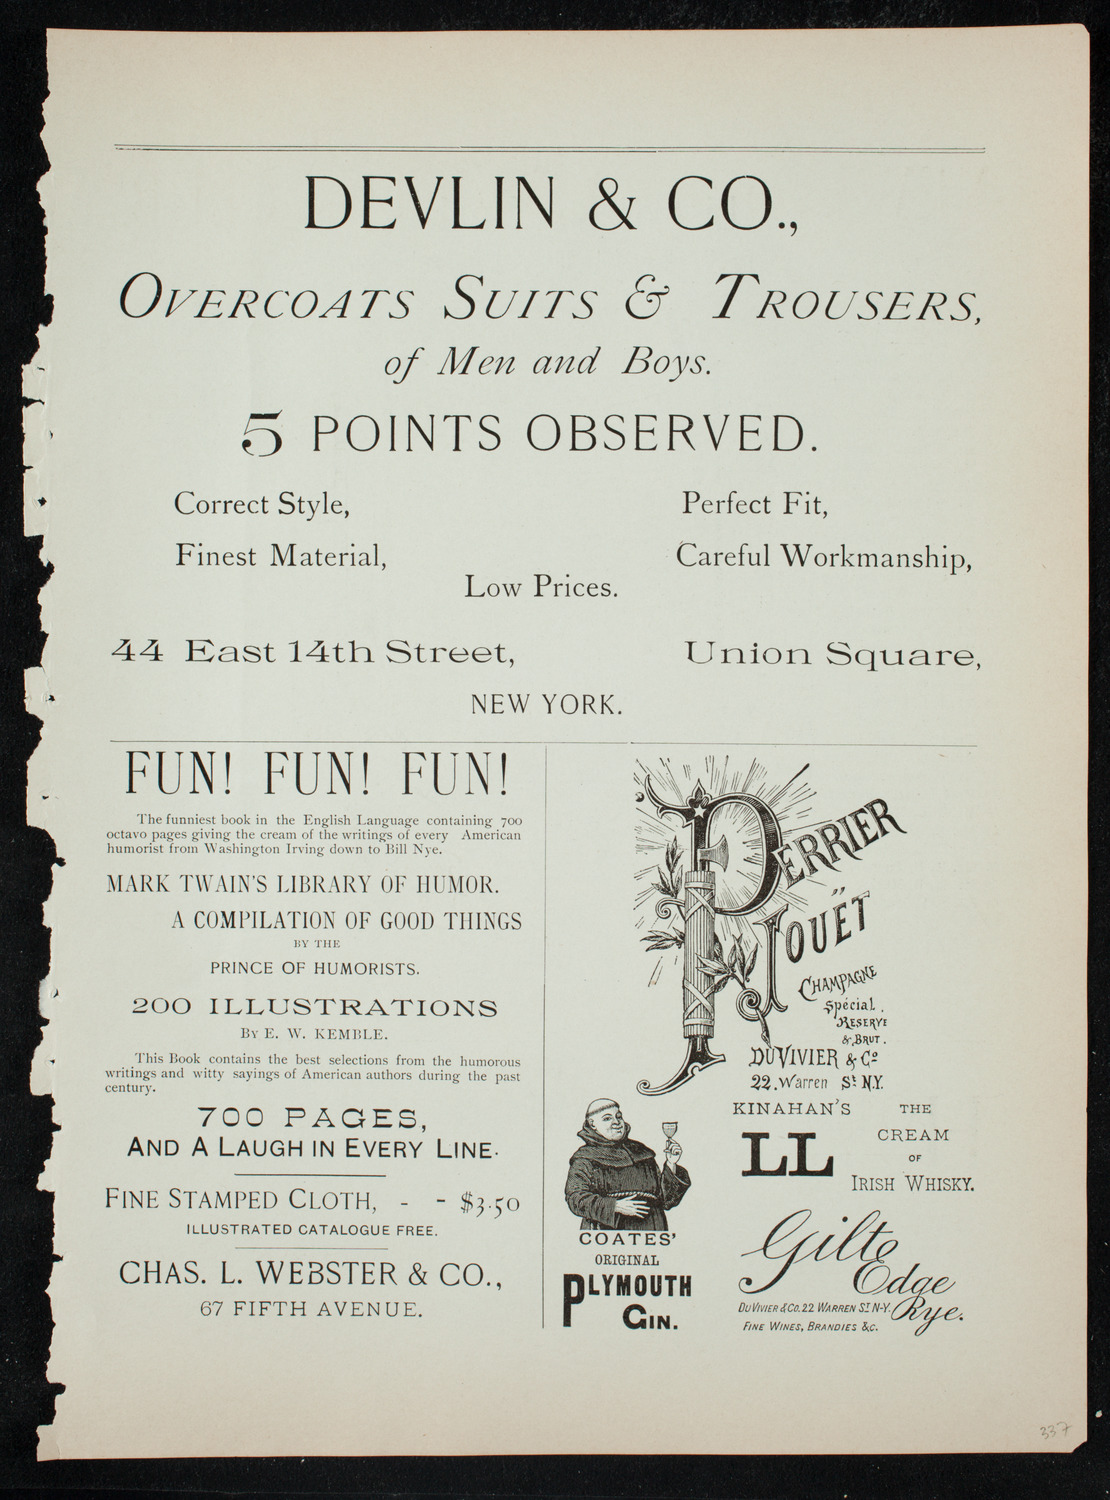 New York Athletic Club Amateur Minstrel Show, December 12, 1891, program page 13